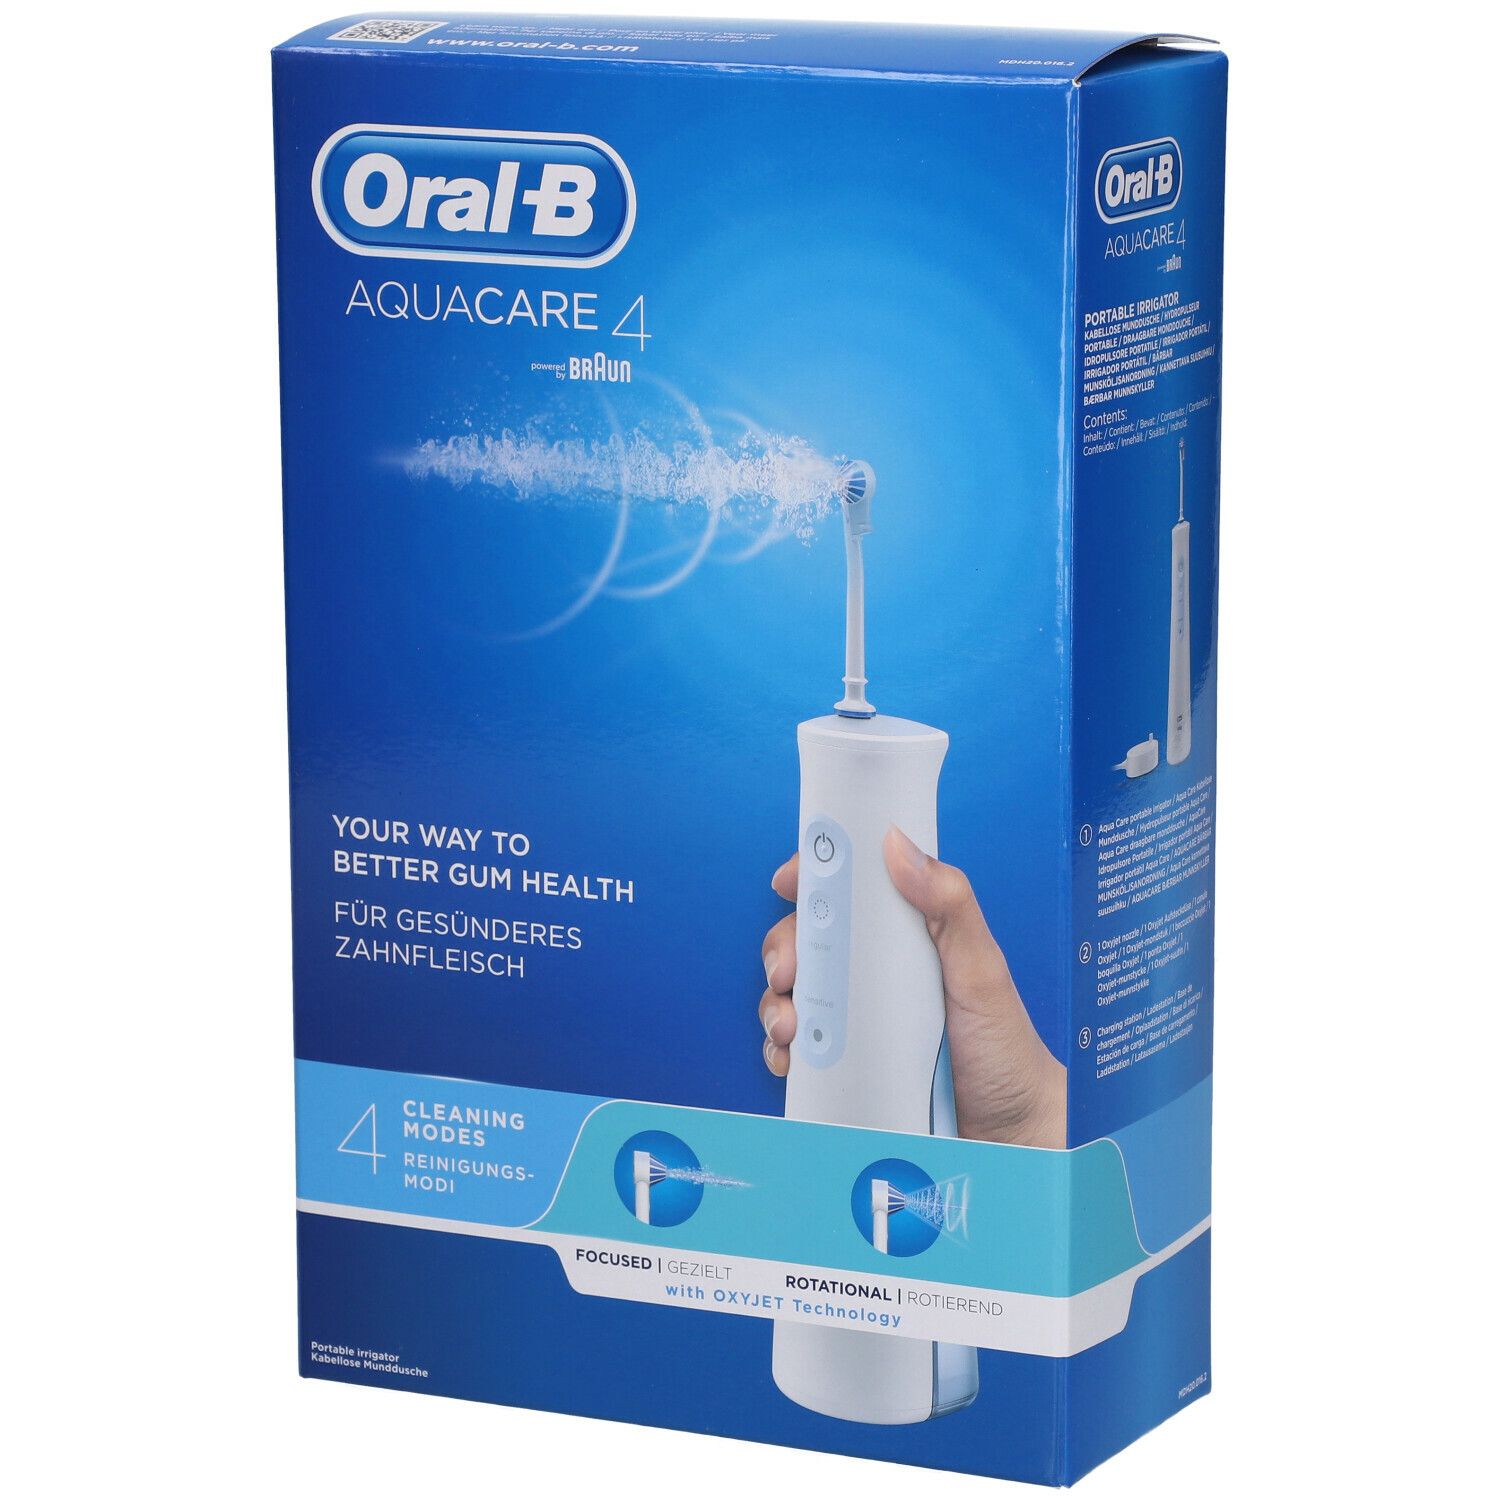 Oral-B Aquacare 4, Hydropulseur Compact avec Technologie Oxyjet